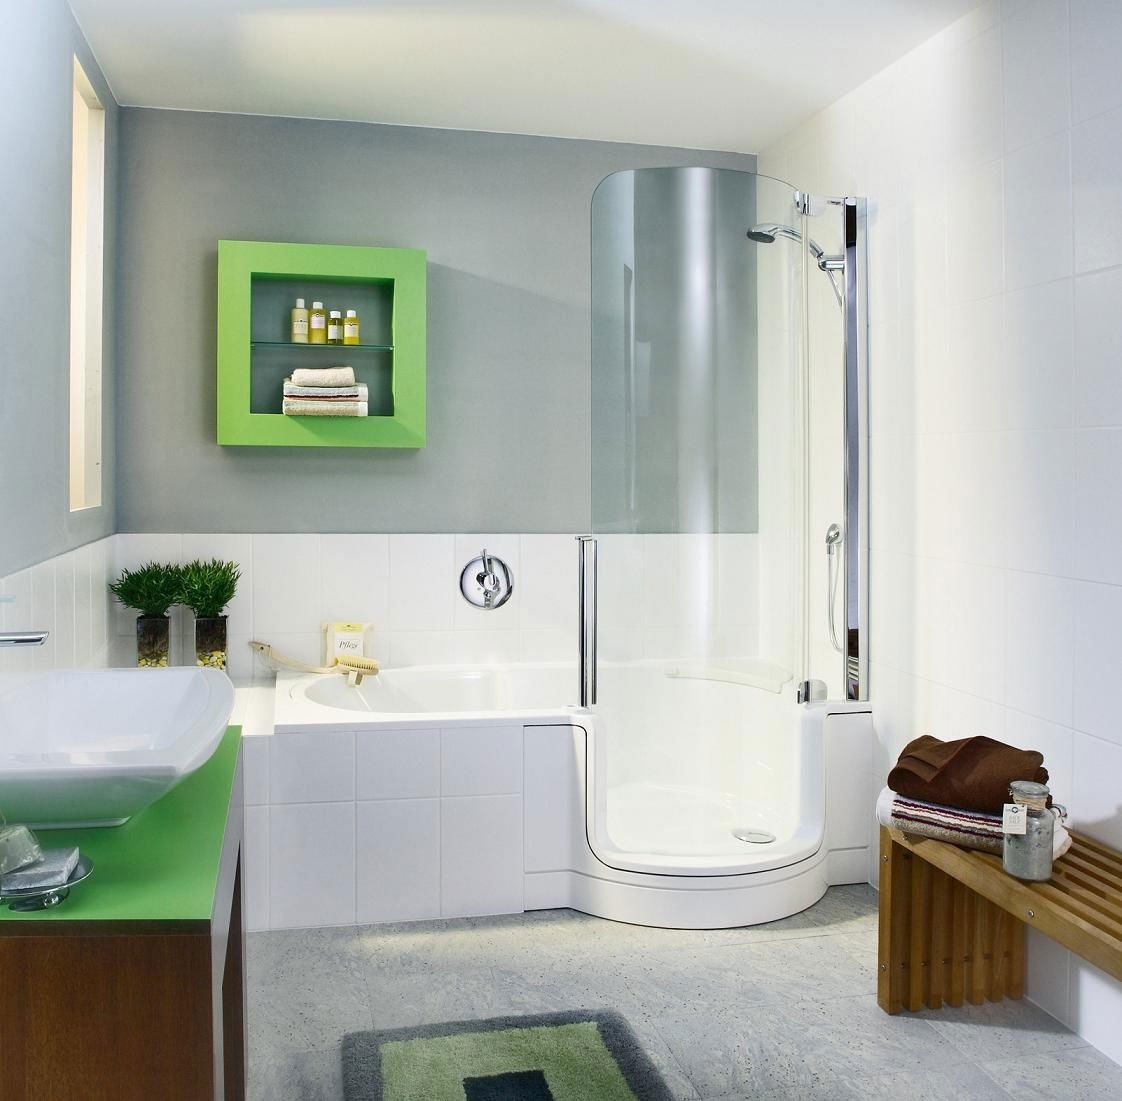 10 Cute Small Bathroom Ideas On A Budget budget bathroom remodel ideas beautiful bathroom remodeling ideas 2022